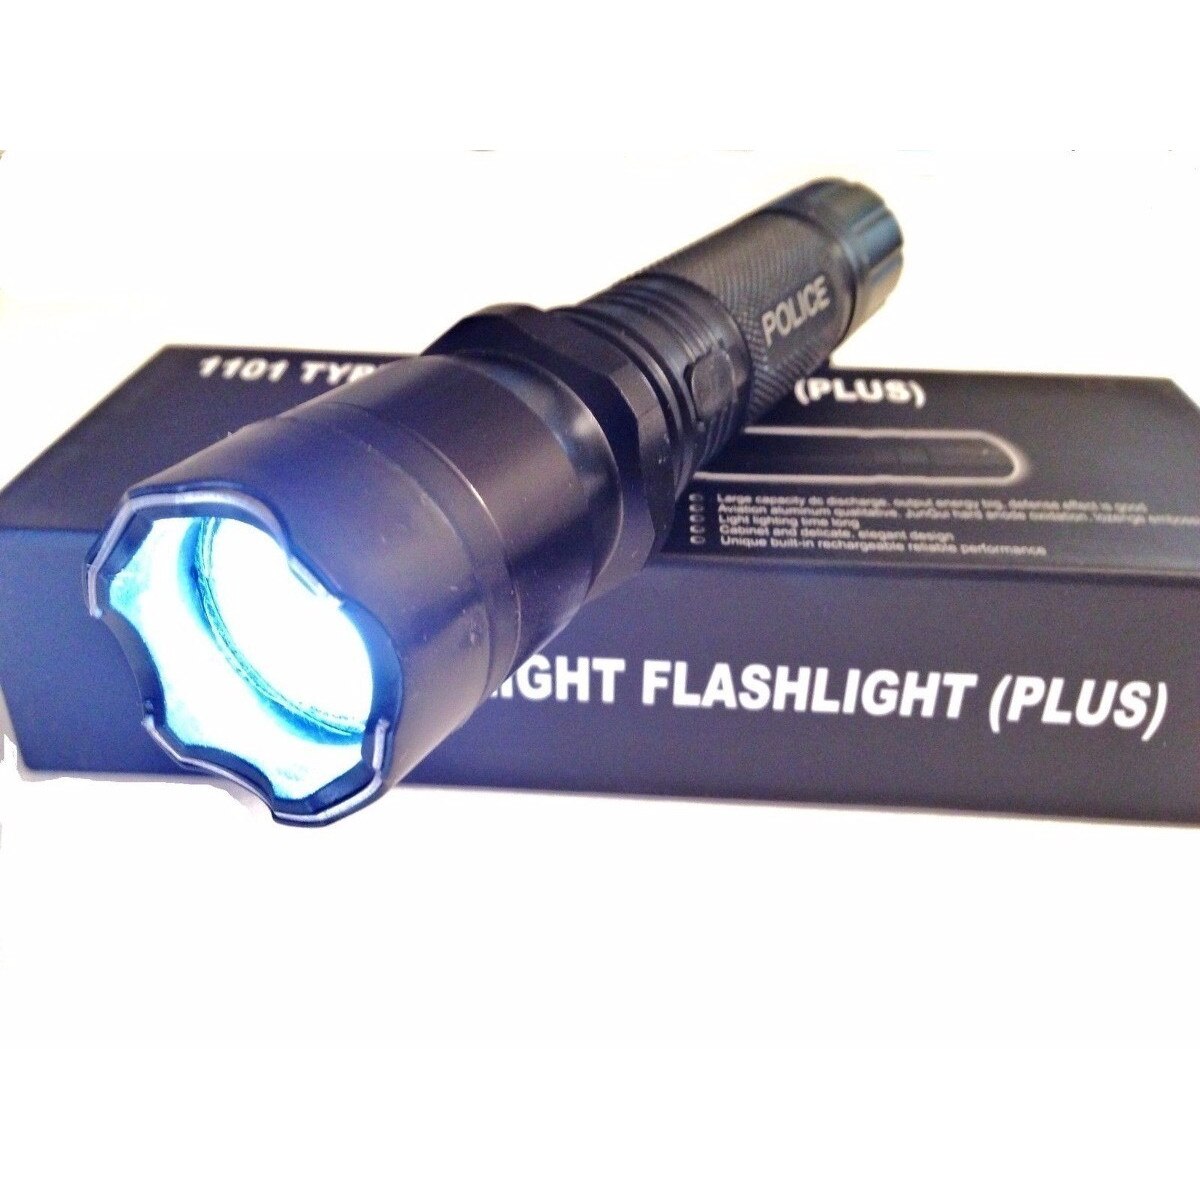 Item light. Фонарь 1101 Type Light Flashlight Plus. Фонарь бита. Фонарик светодиодный аккумуляторный Тесла. Фонарик MX-a73-p60.